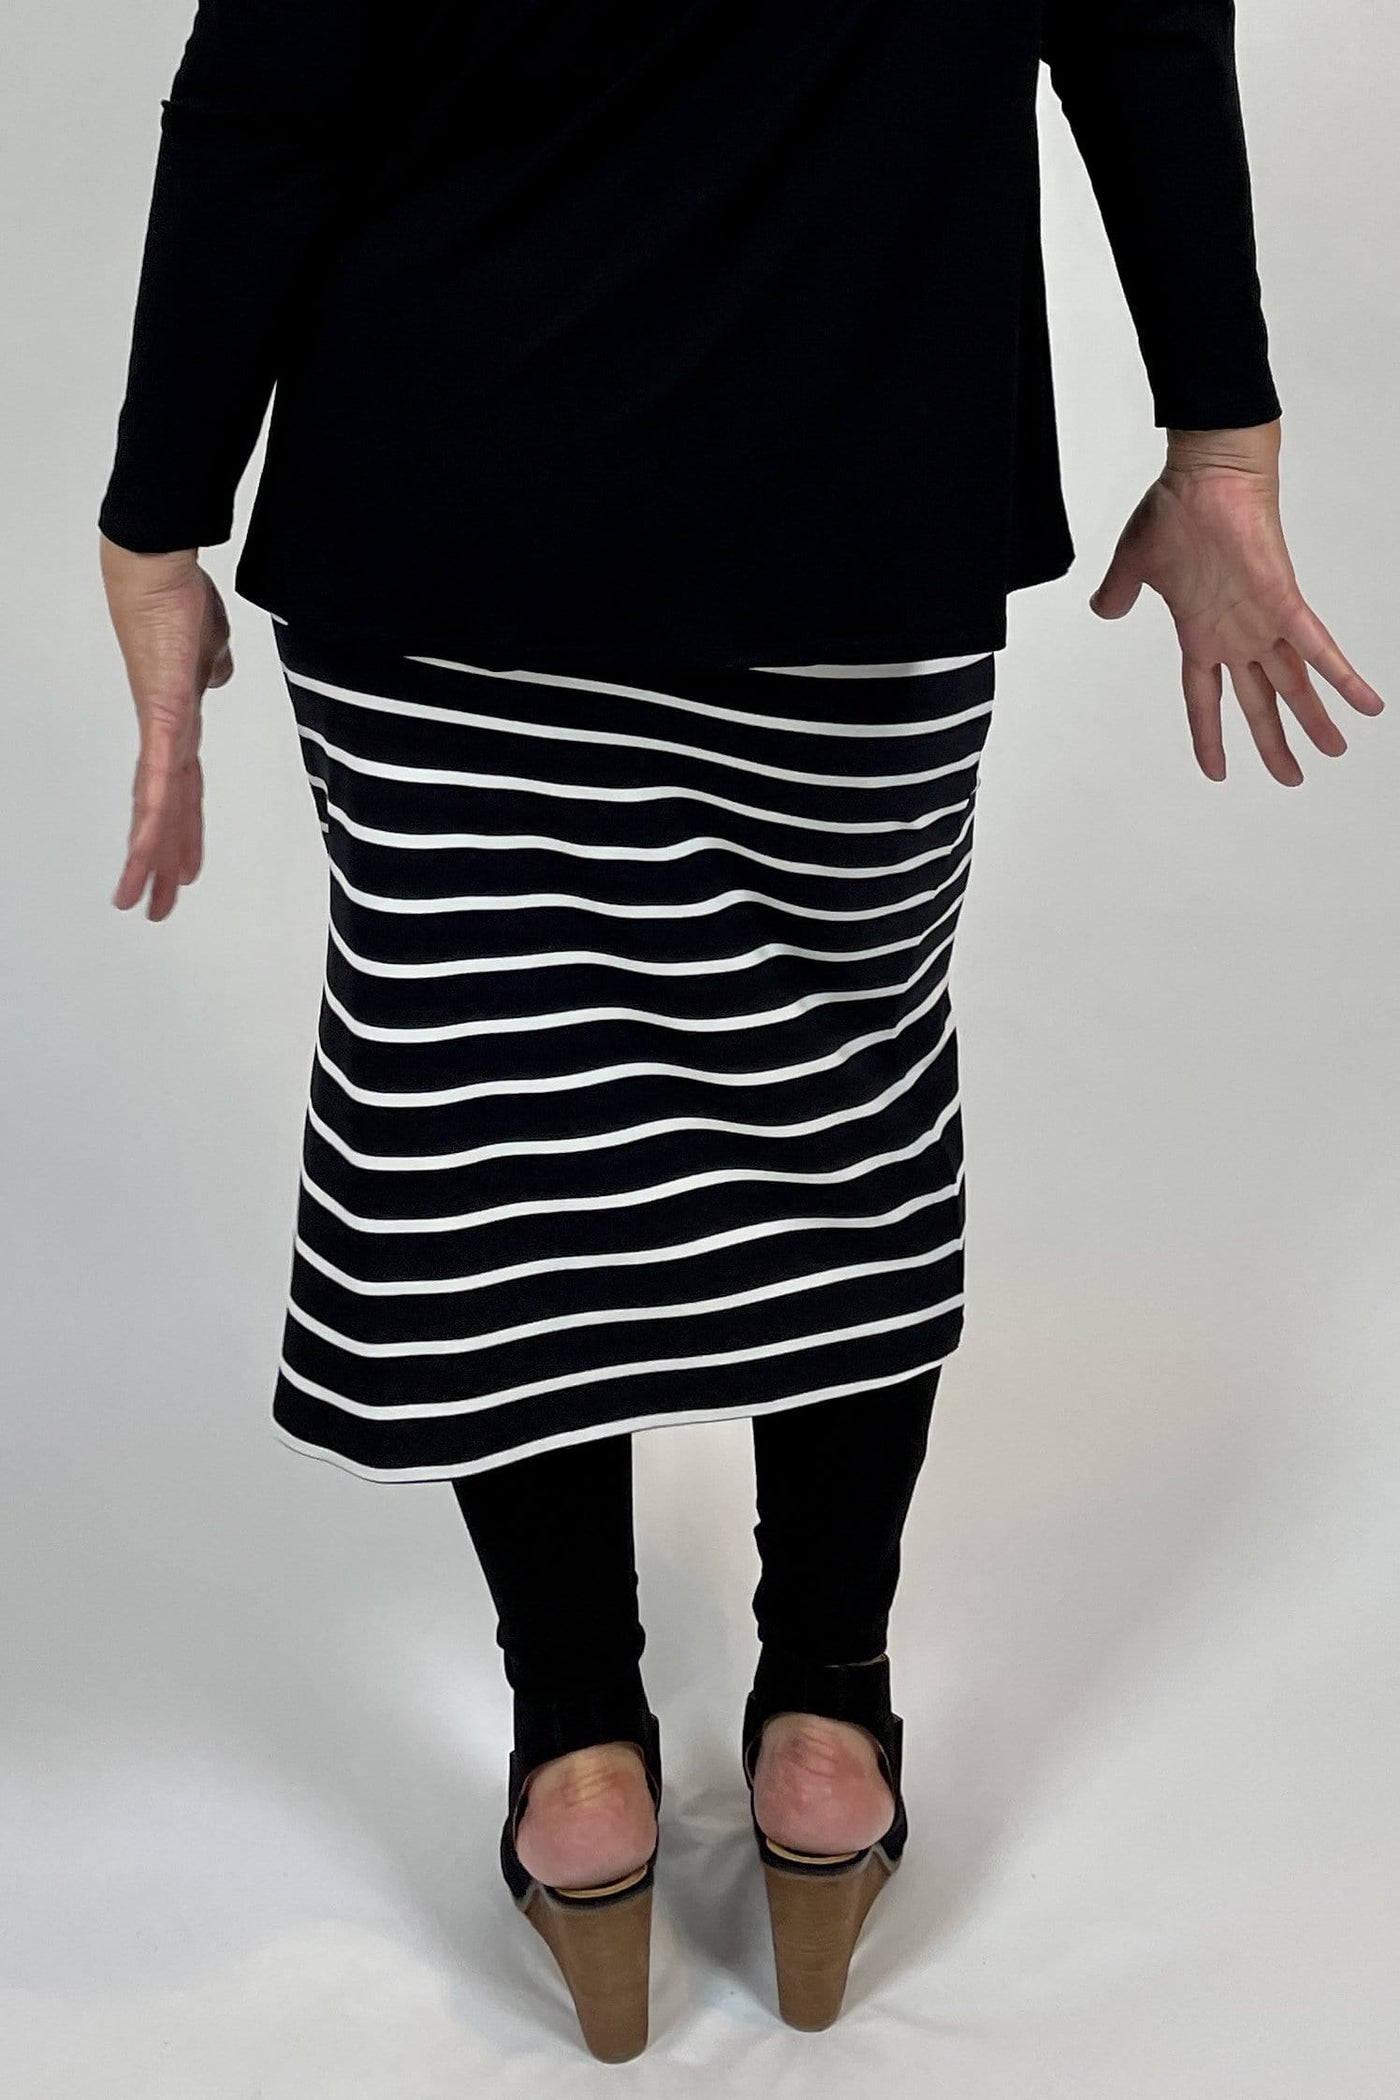 WEYRE Skirt midi skirt black and white stripe